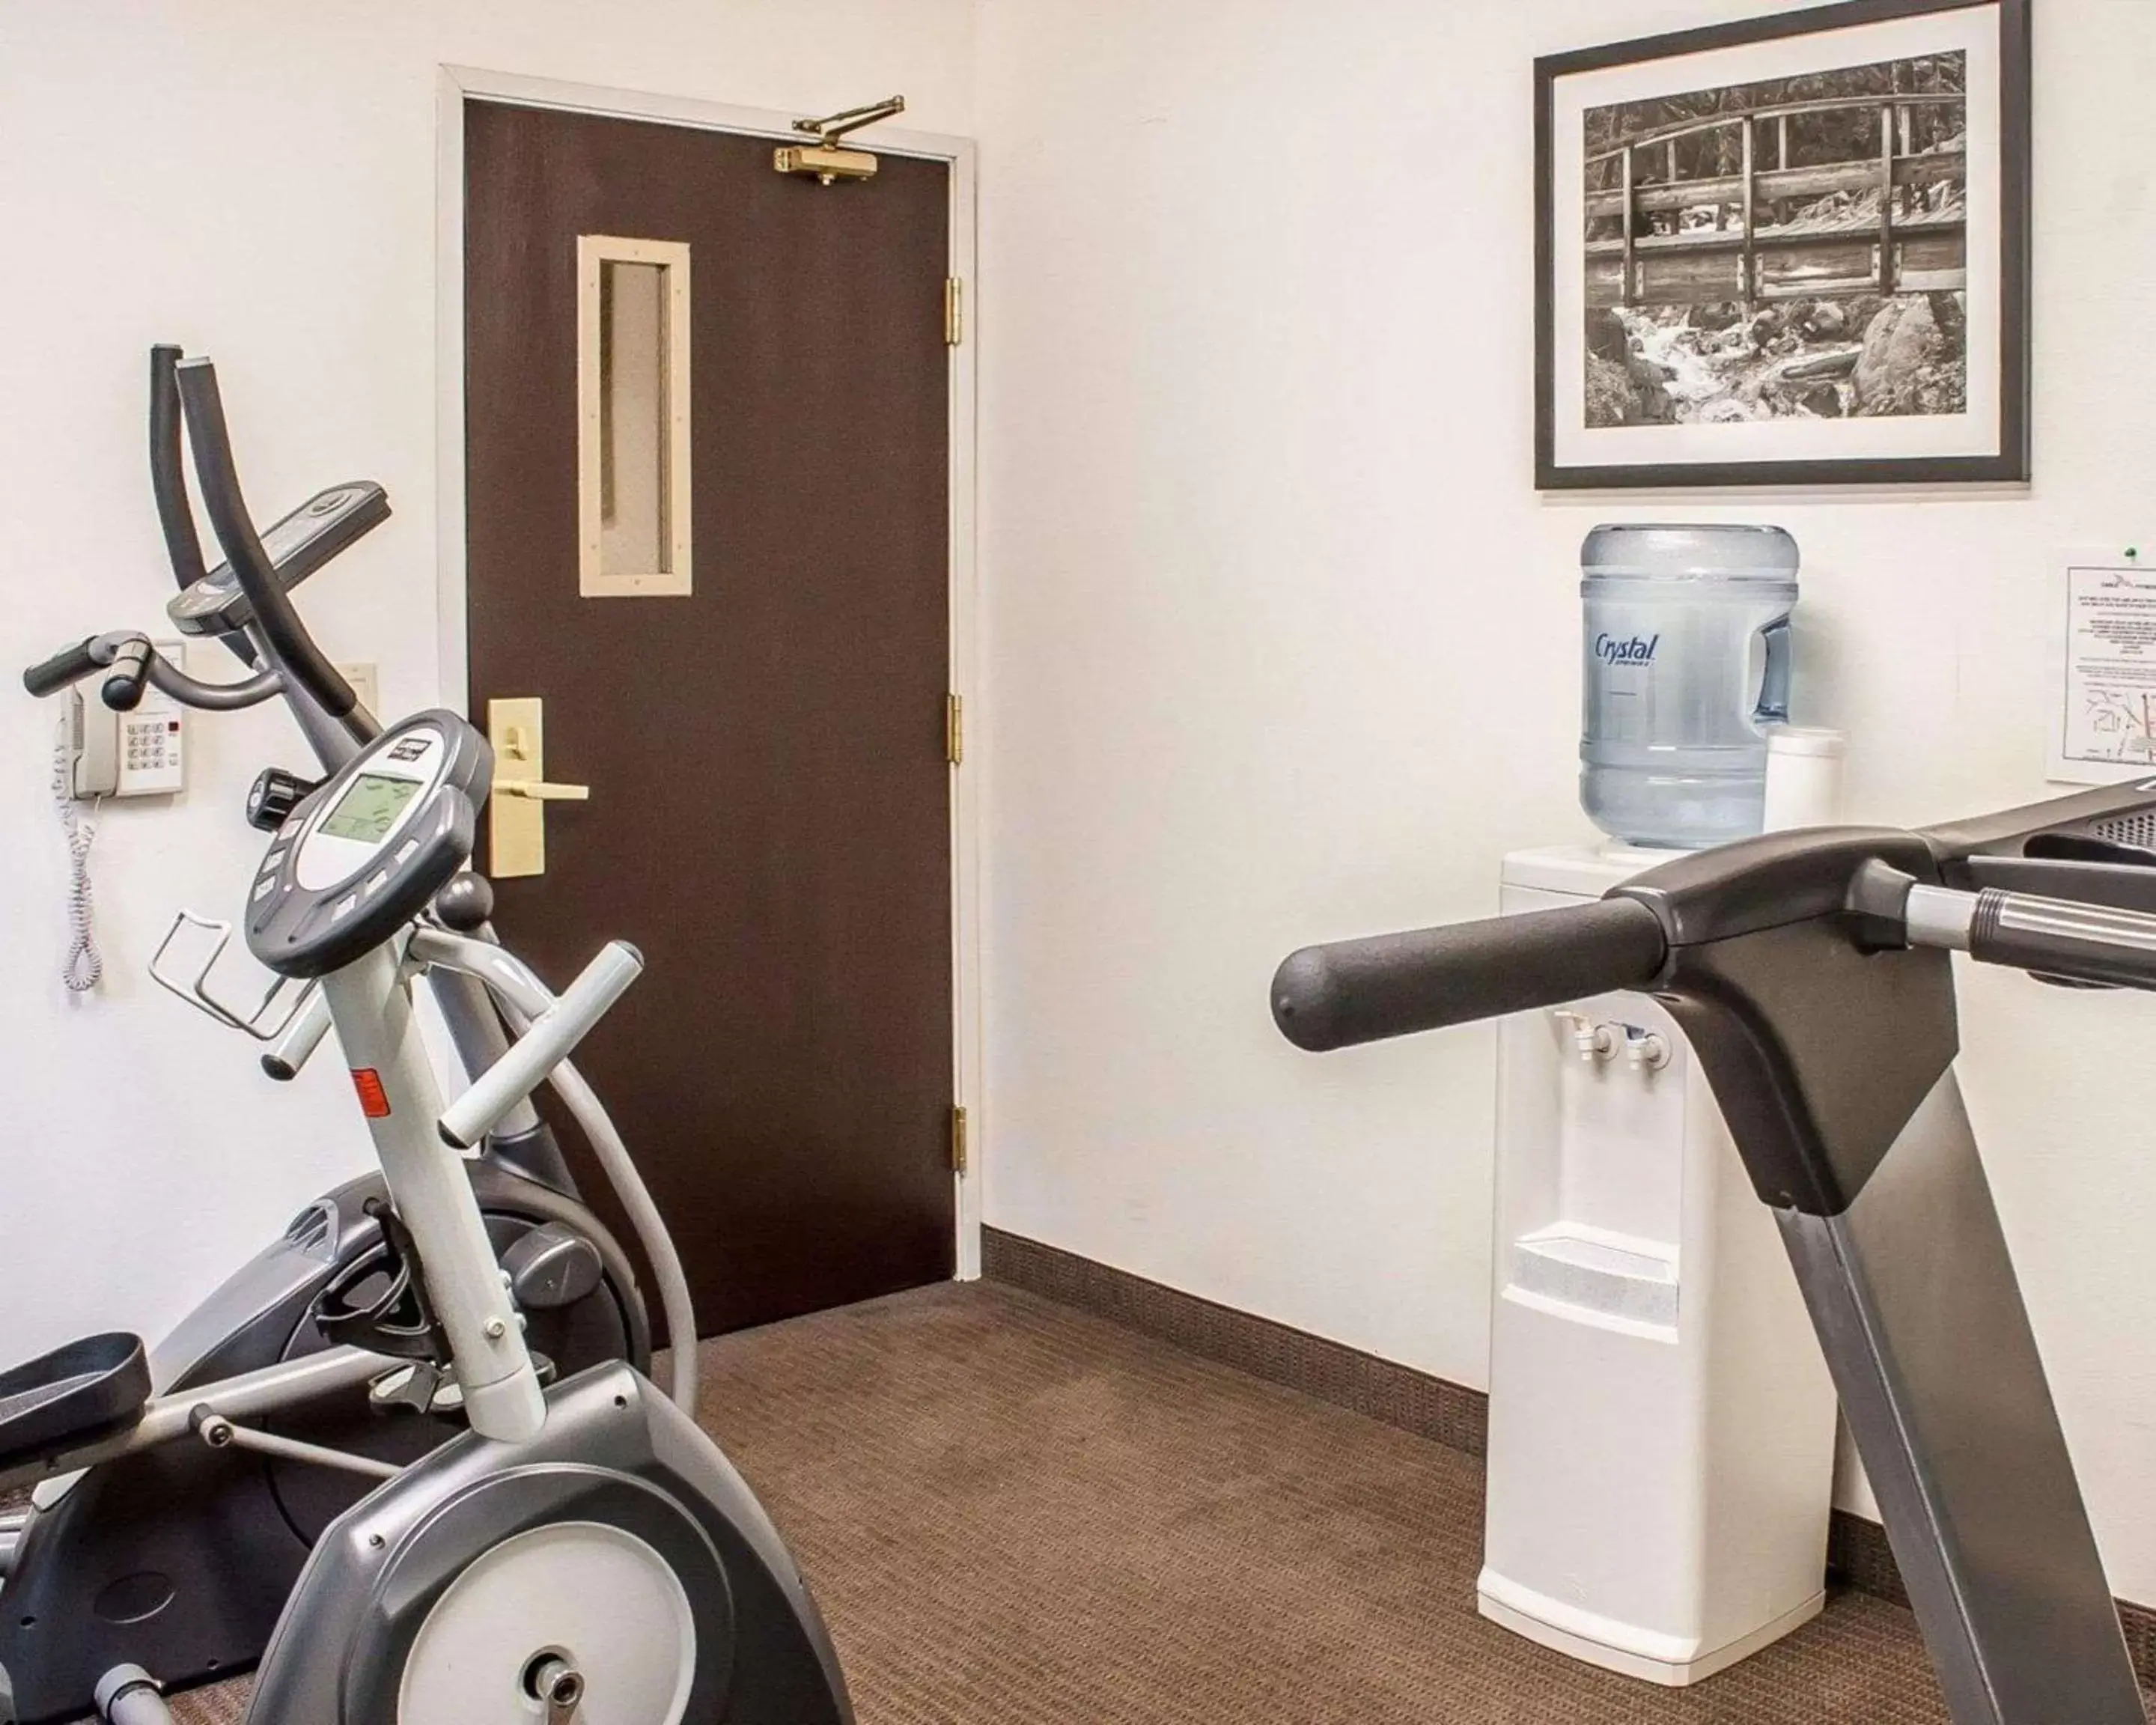 Fitness centre/facilities, Fitness Center/Facilities in Sleep Inn SeaTac